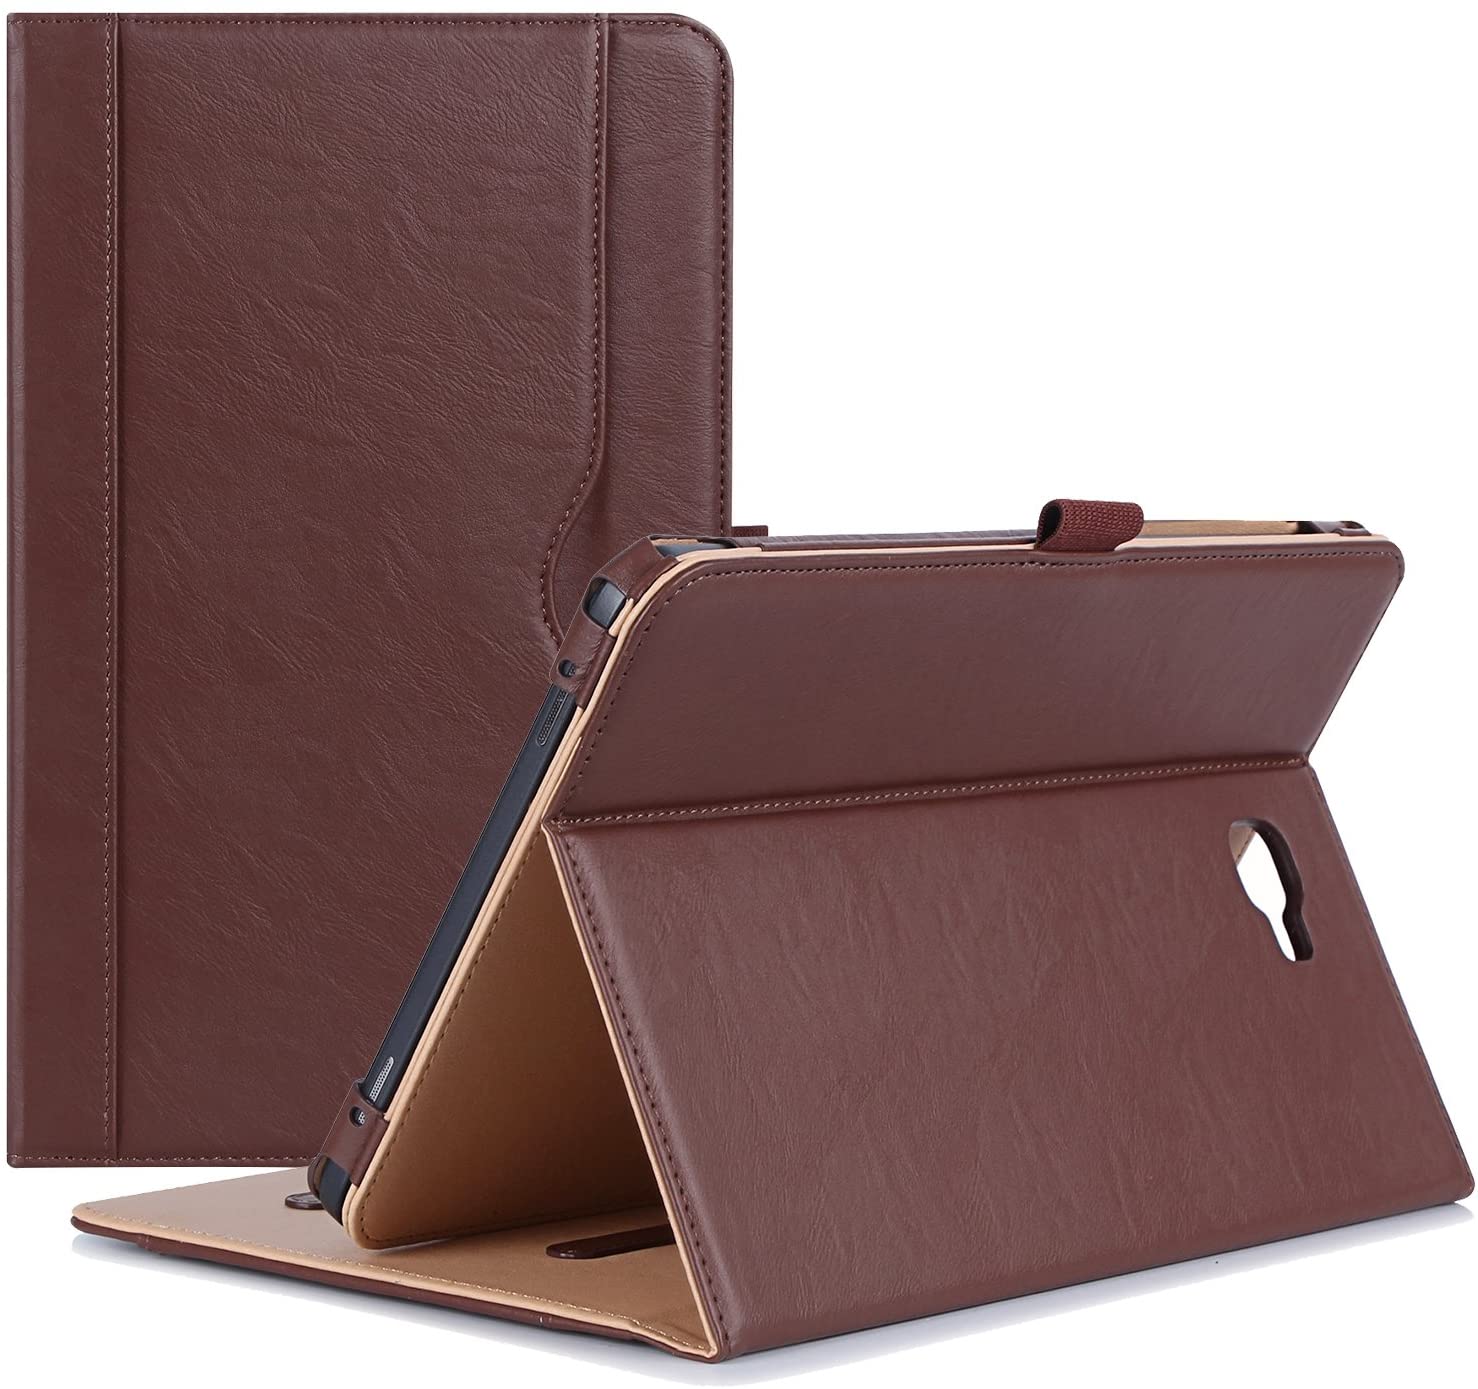 Galaxy Tab A 10.1 2016 T580 Leather Folio Case | ProCase brown